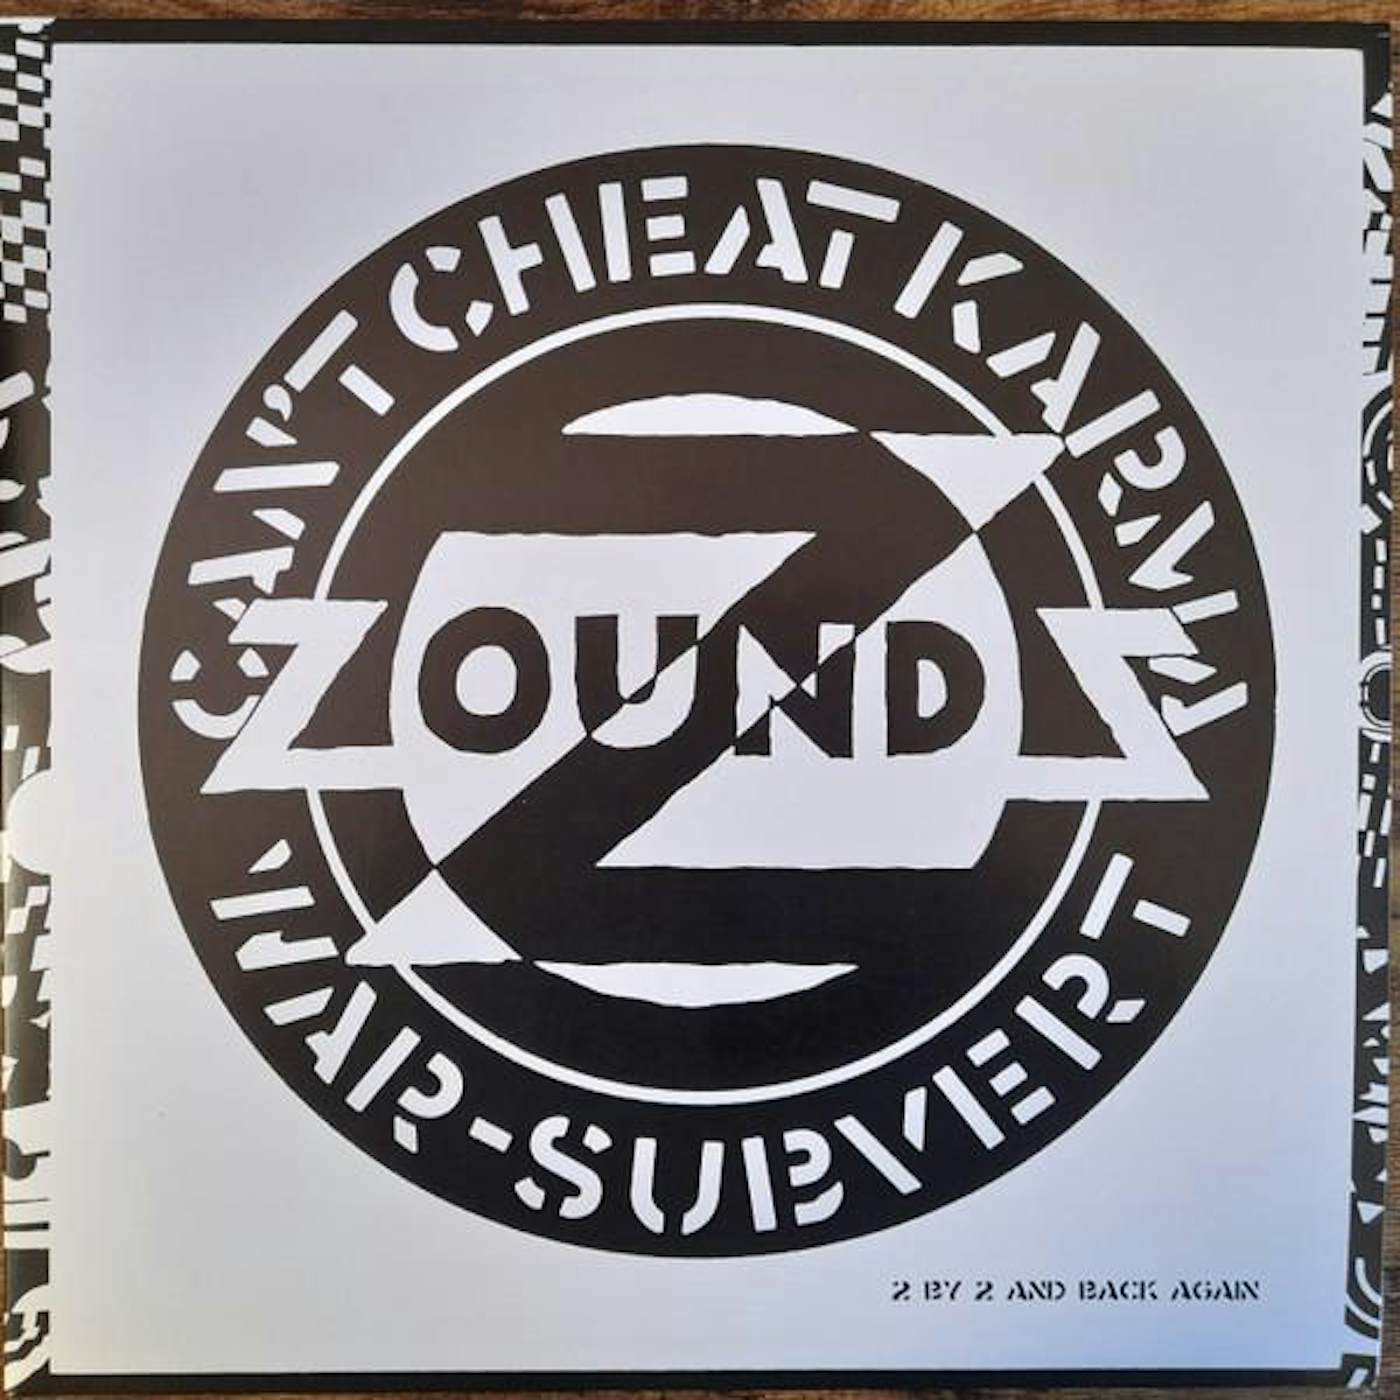 Zounds CAN’T CHEAT KARMA/WA /SUBVERT Vinyl Record